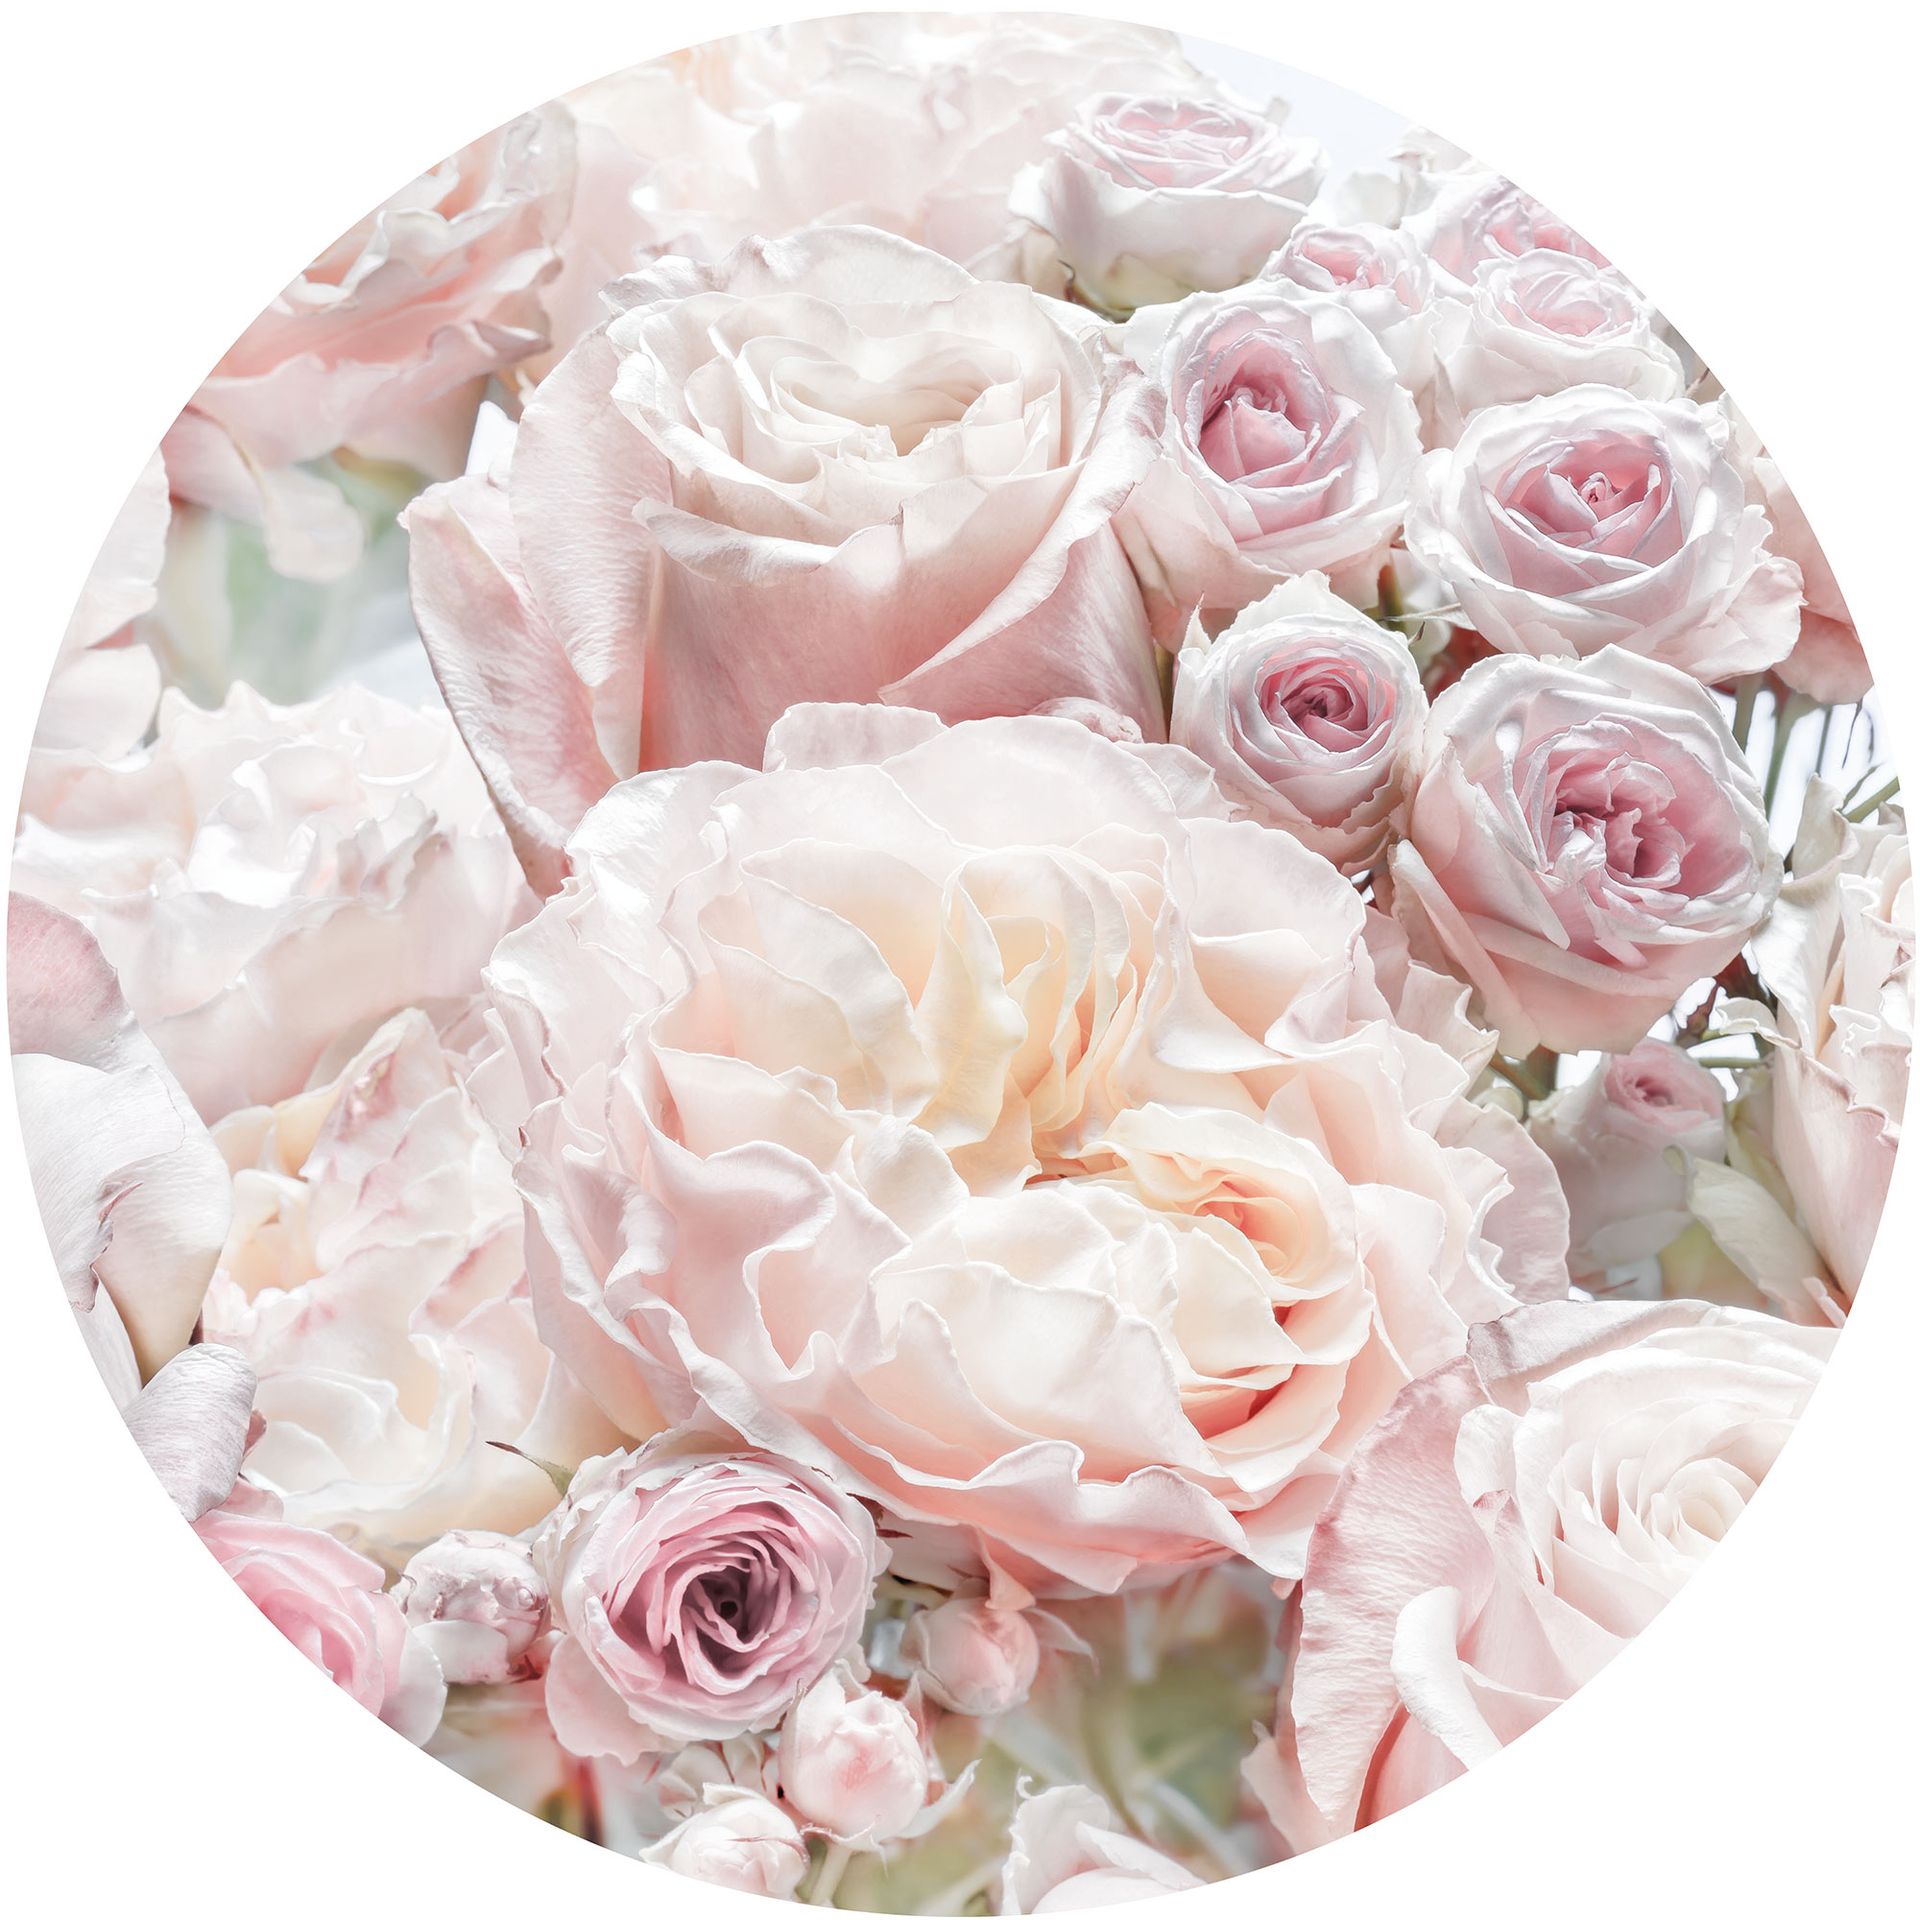 Selbstklebende Vlies Fototapete/Wandtattoo - Pink and Cream Roses - Größe 125 x 125 cm